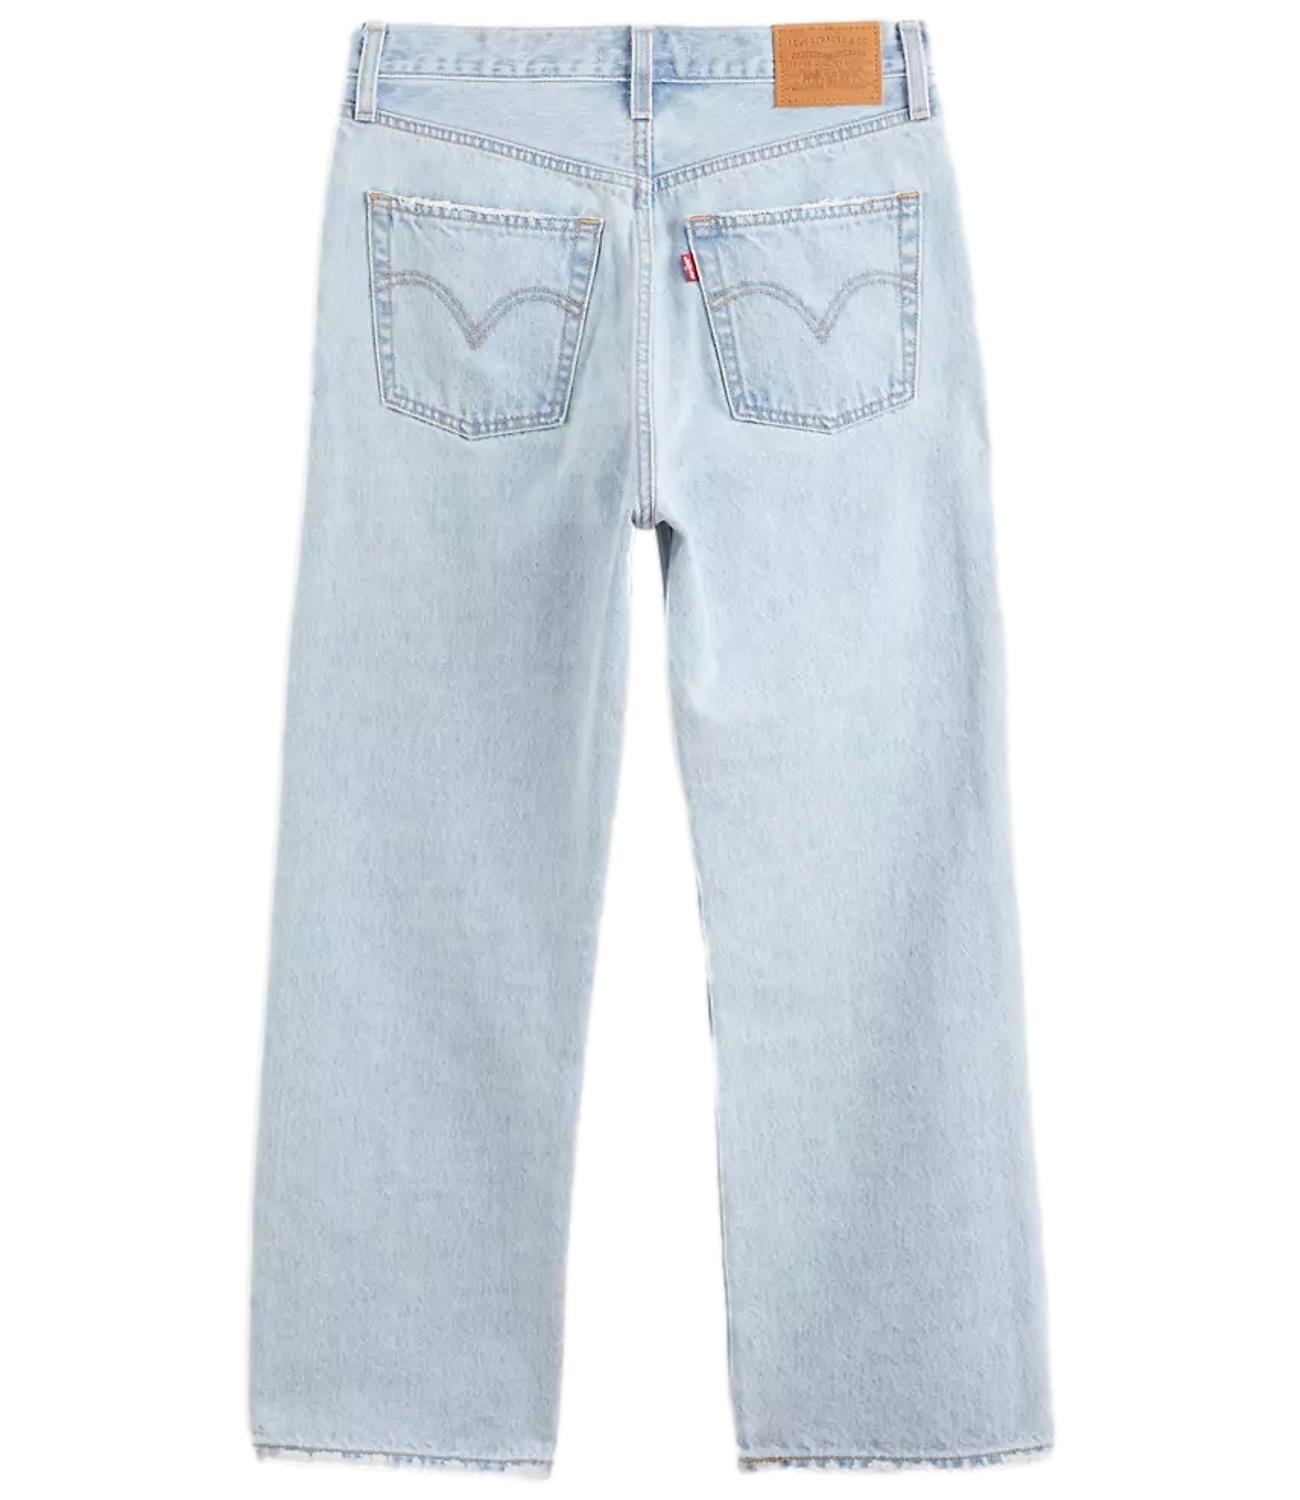 LEVI'S Jeans donna